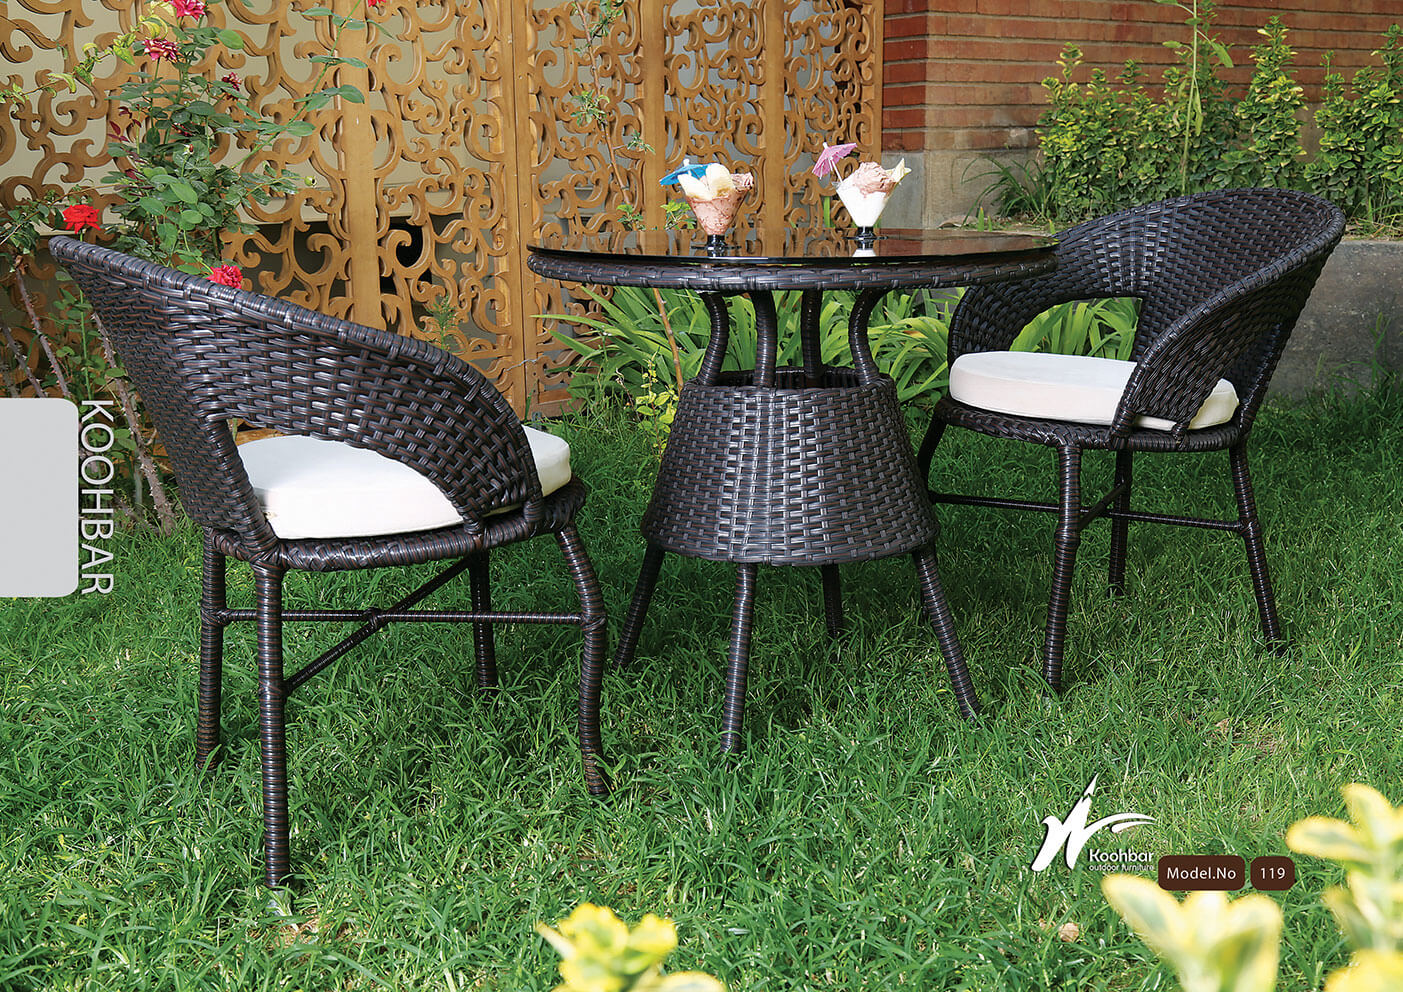 kohbar patio conversation sets 119 model0 - ست میز صندلی صبحانه خوری کوهبر مدل ۱۱۹ -  - patio-dining-furniture